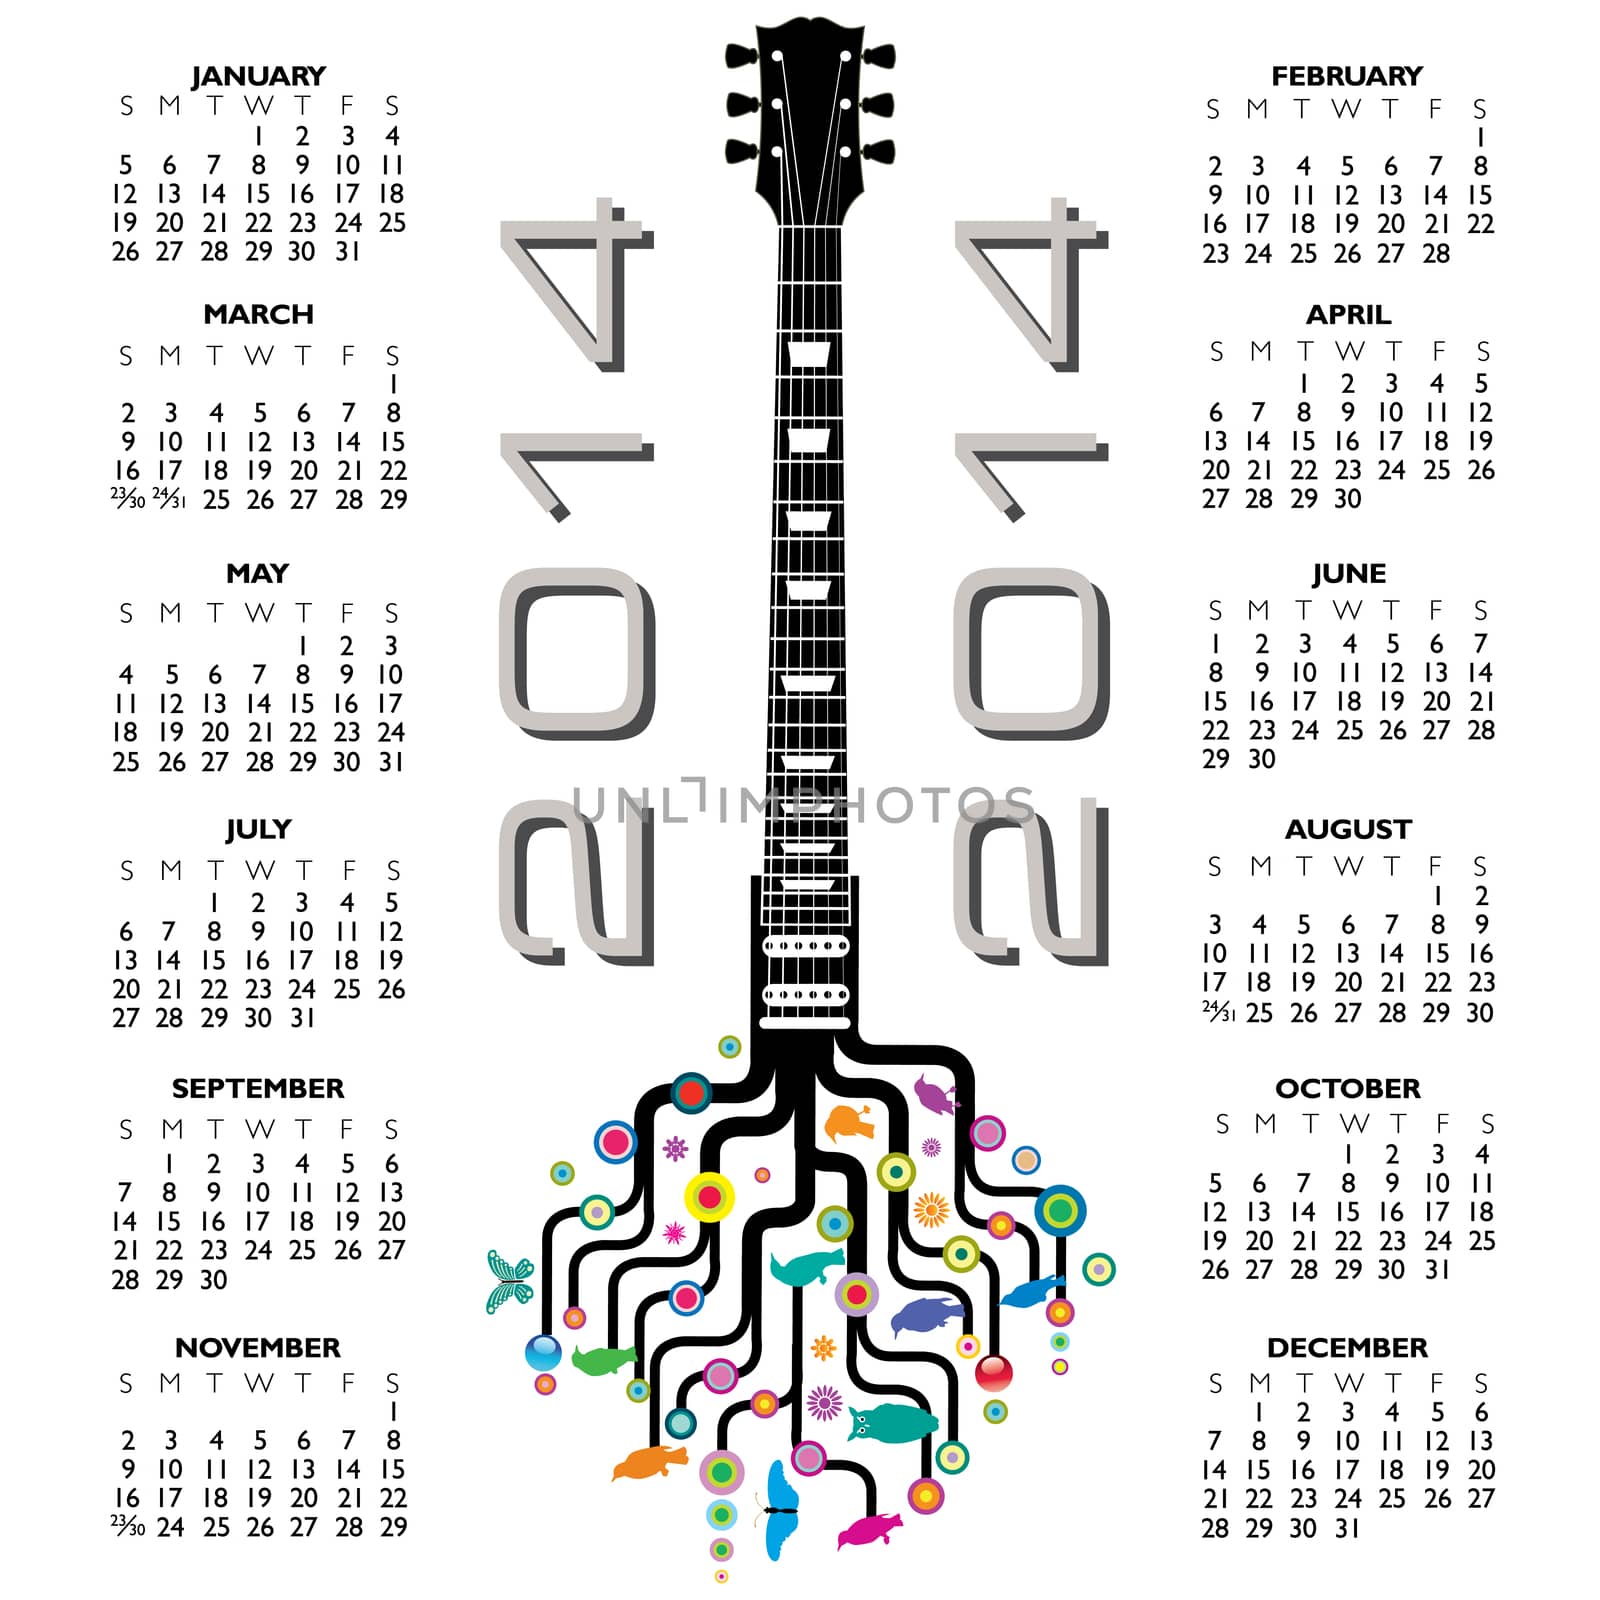 2014 Creative Calendar for Print or Web